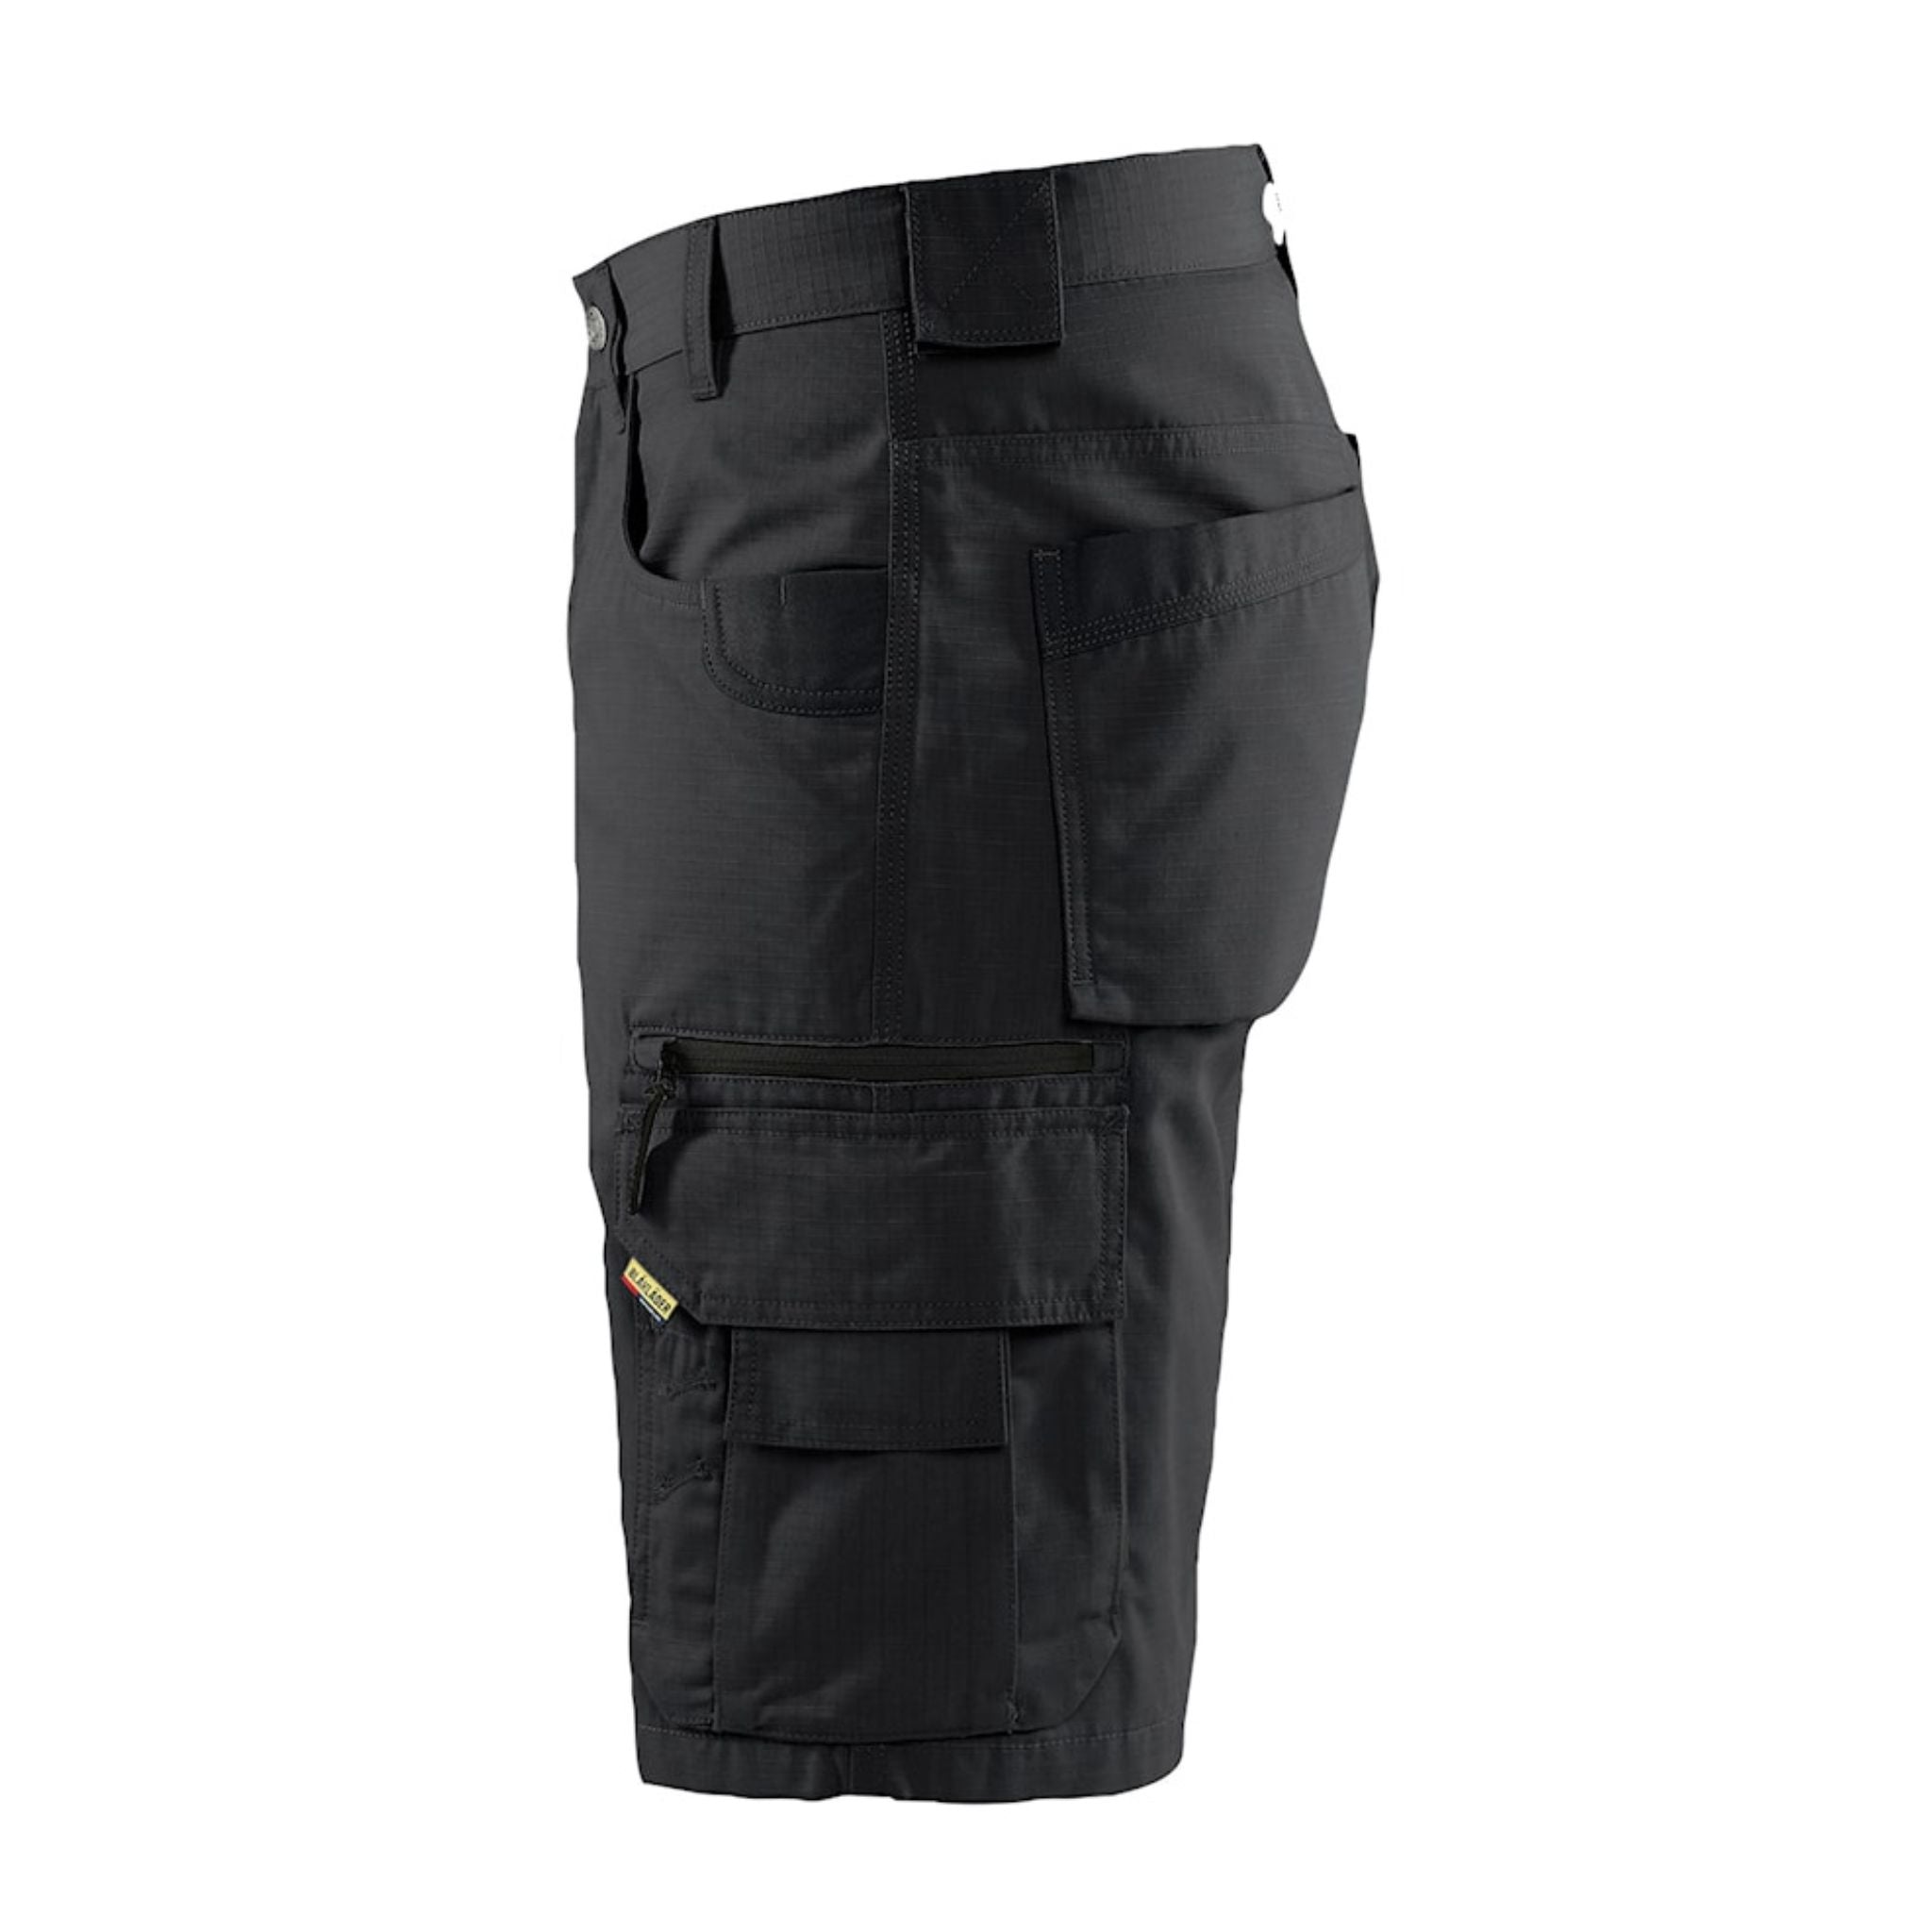 Men's black ripstop work shorts leg pockets